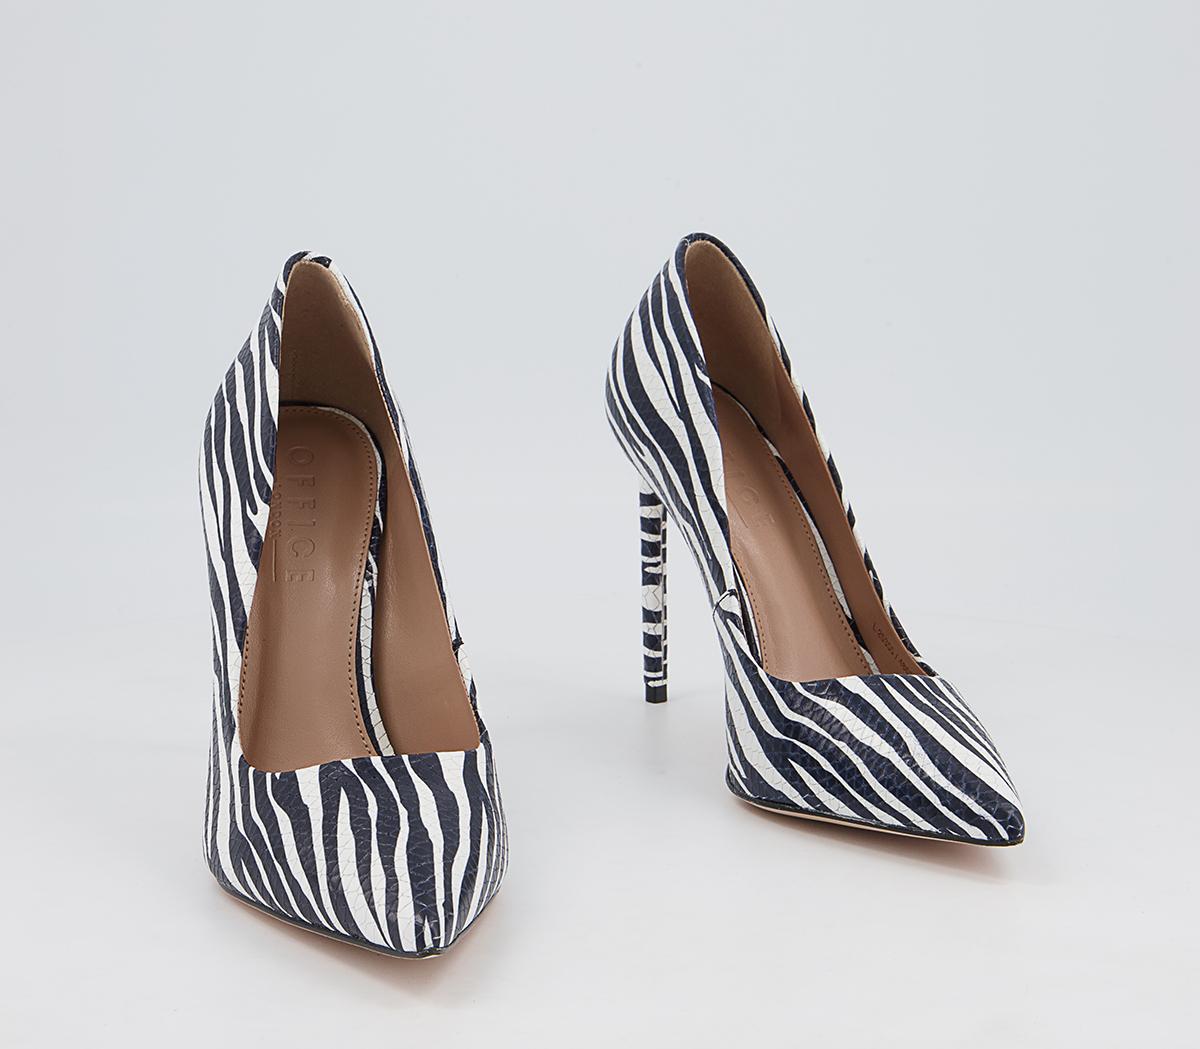 OFFICE Harlem Pointed Court Stiletto High Heels Zebra Leather - High Heels